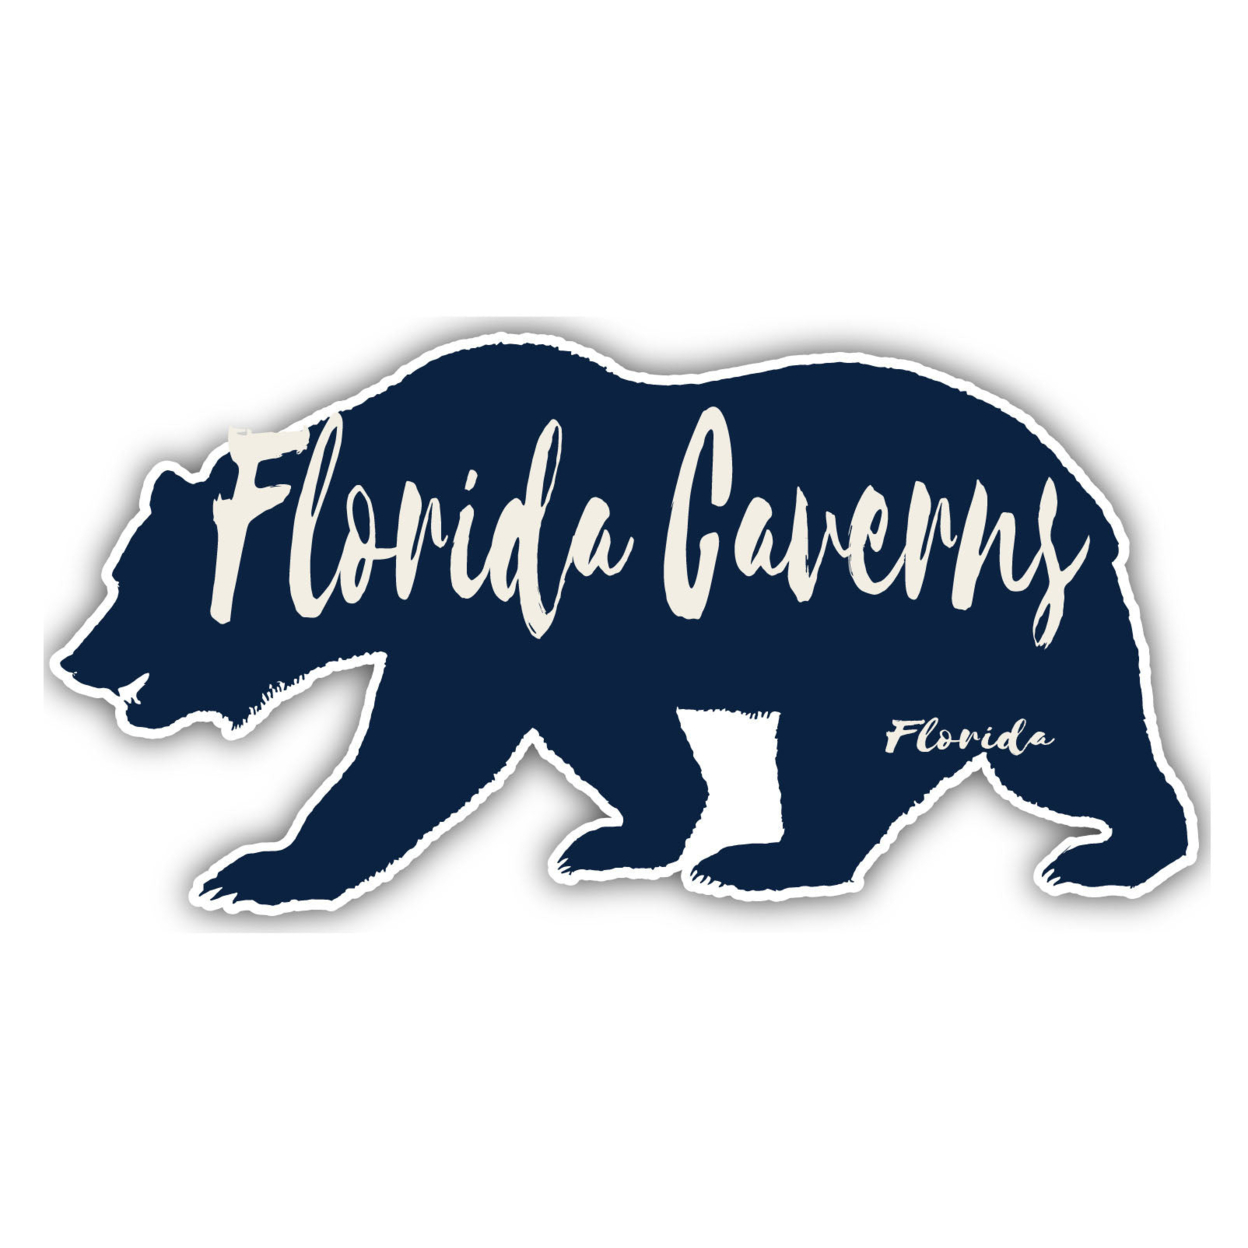 Florida Caverns Florida Souvenir Decorative Stickers (Choose Theme And Size) - 4-Pack, 8-Inch, Bear